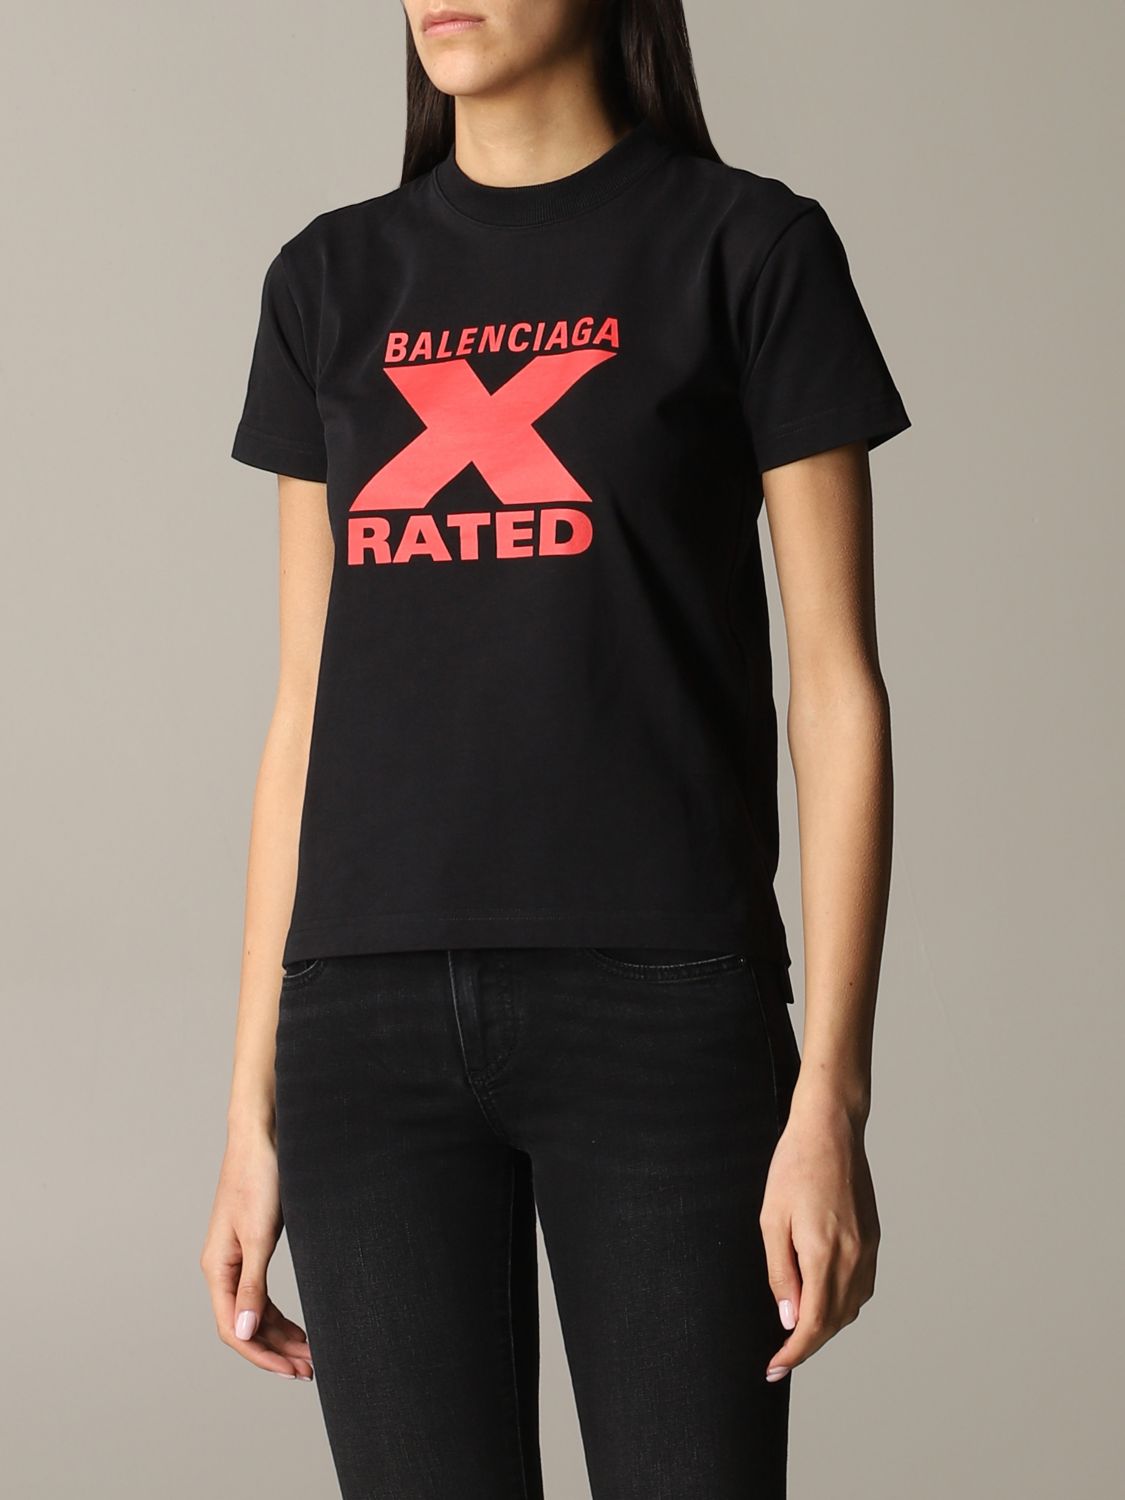 Balenciaga Outlet: T-shirt with x rated logo | T-Shirt Balenciaga Women ...